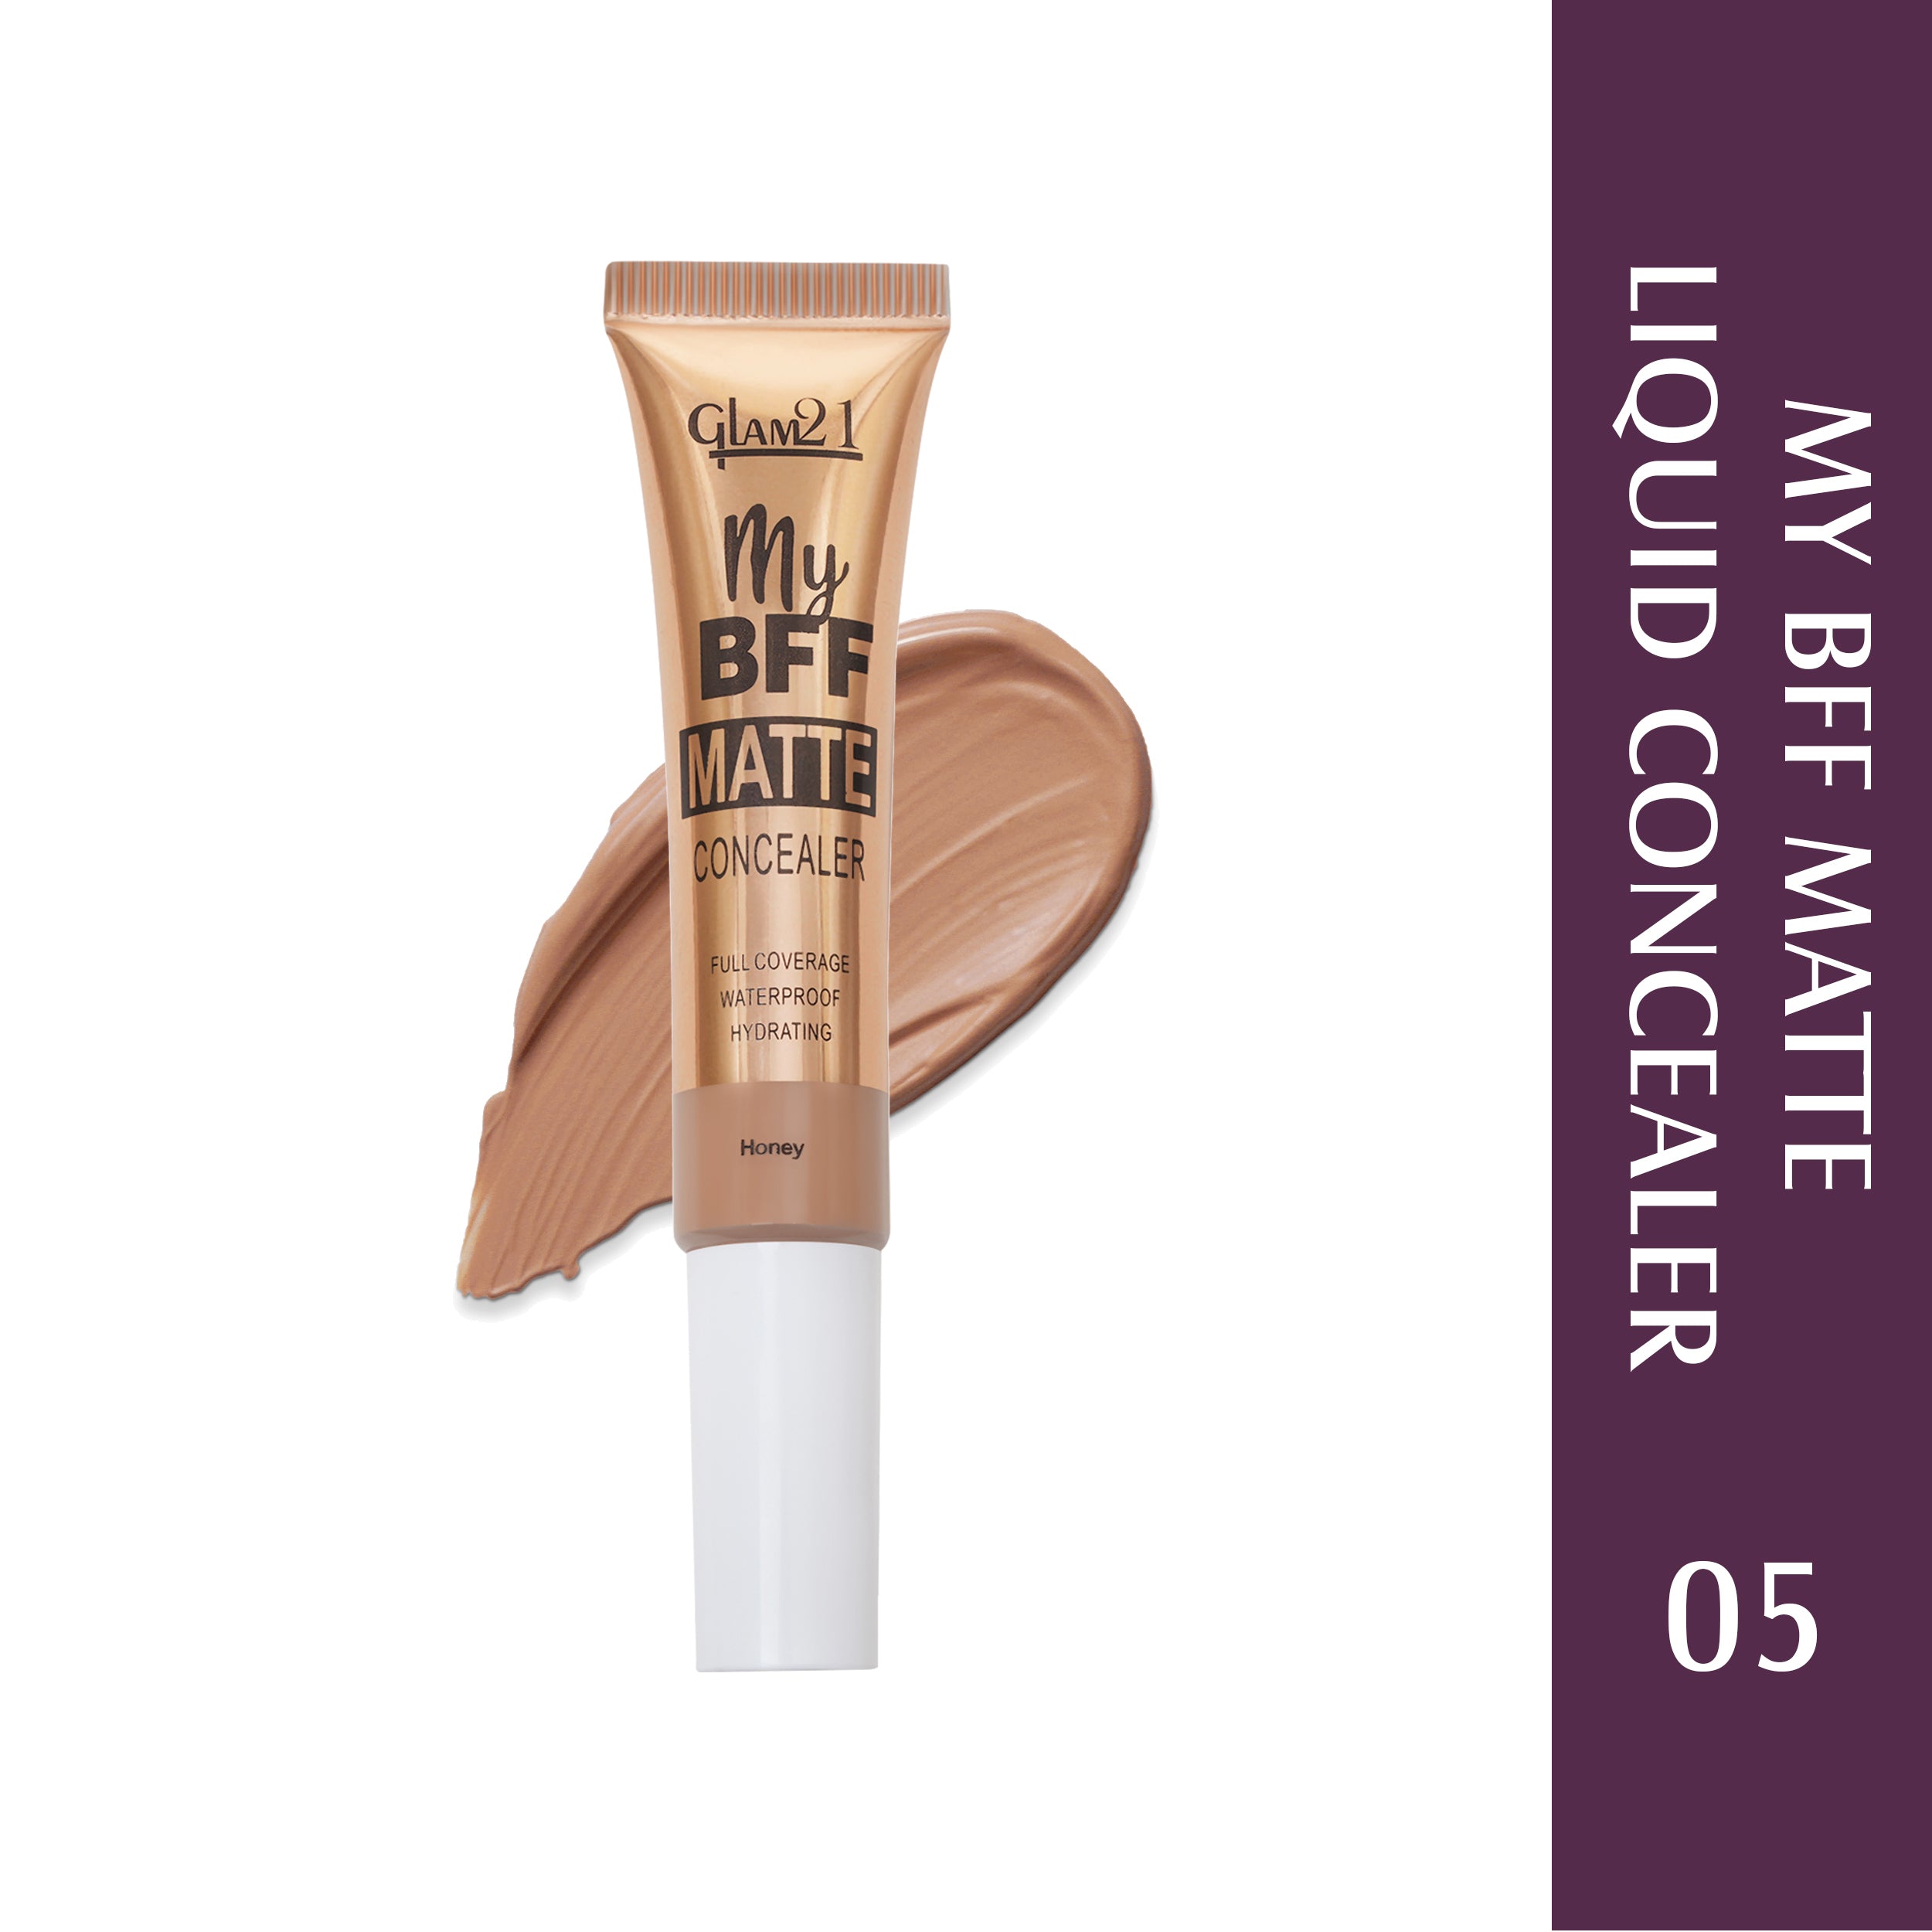 Glam21 My BFF Matte Liquid Concealer-Conceal,Contour,&Highlights Your Face|Matte Finish Concealer (Honey, 8 g)